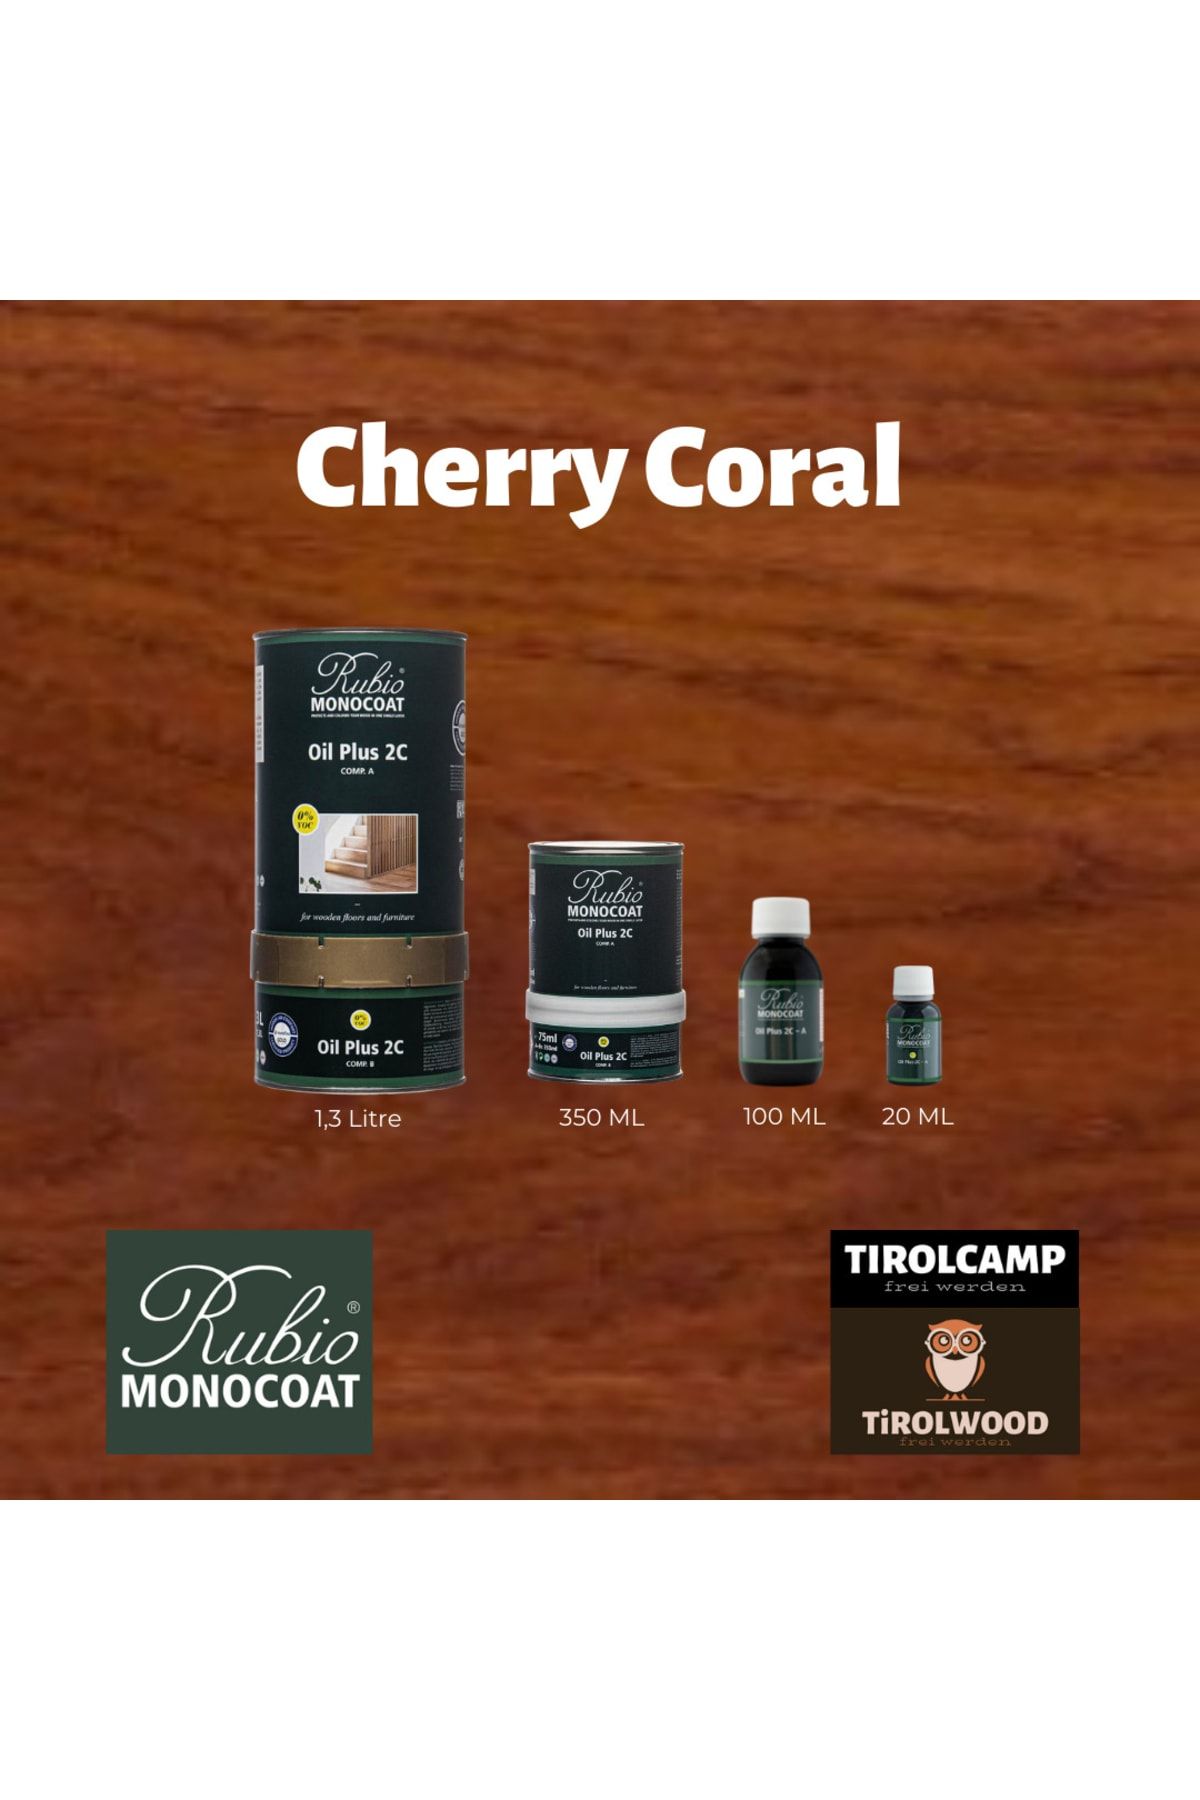 Rubio Monocoat Oil Plus 2c - 350 Ml Cherry Coral